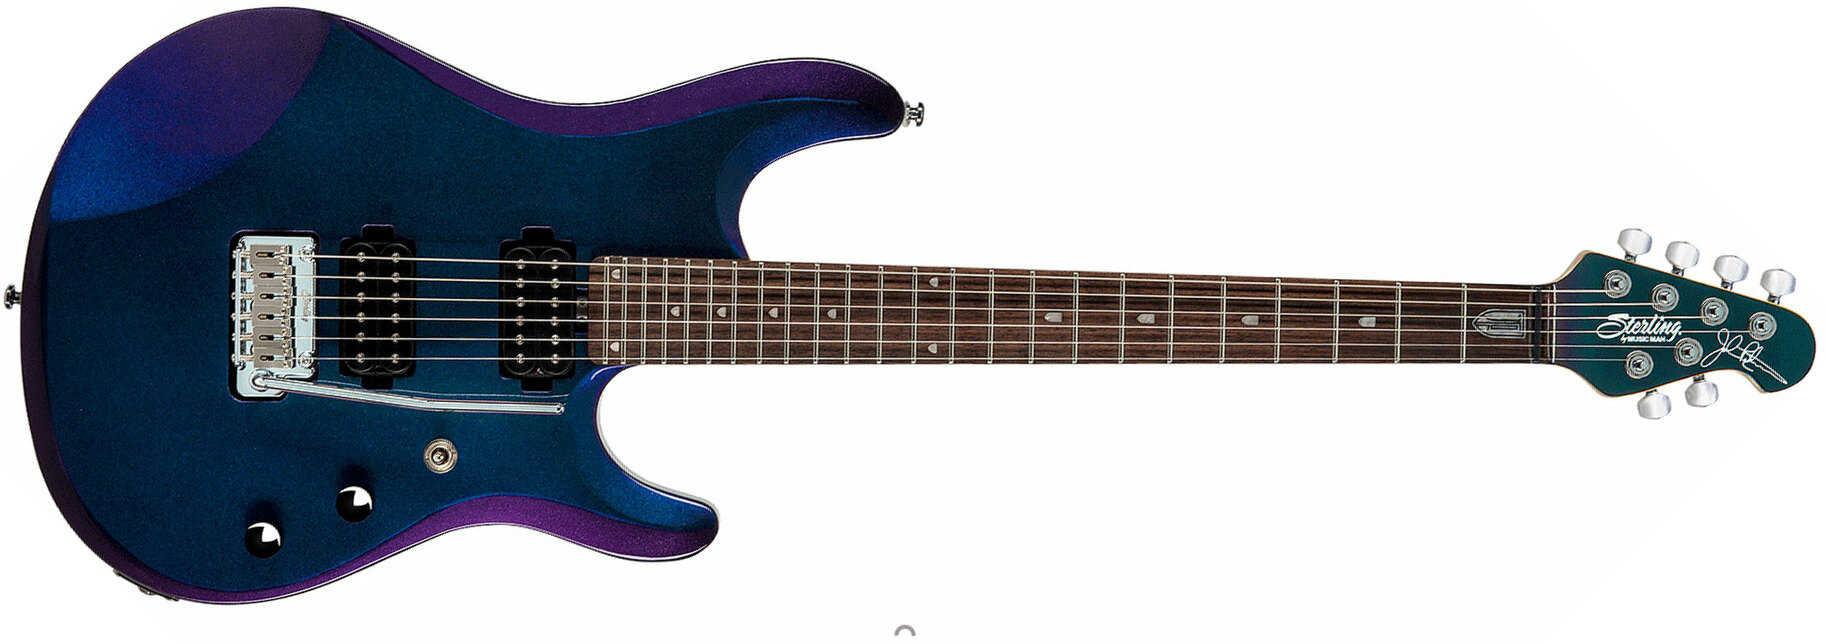 Sterling By Musicman John Petrucci Jp60 Signature Hh Trem Rw - Mystic Dream - Str shape electric guitar - Main picture